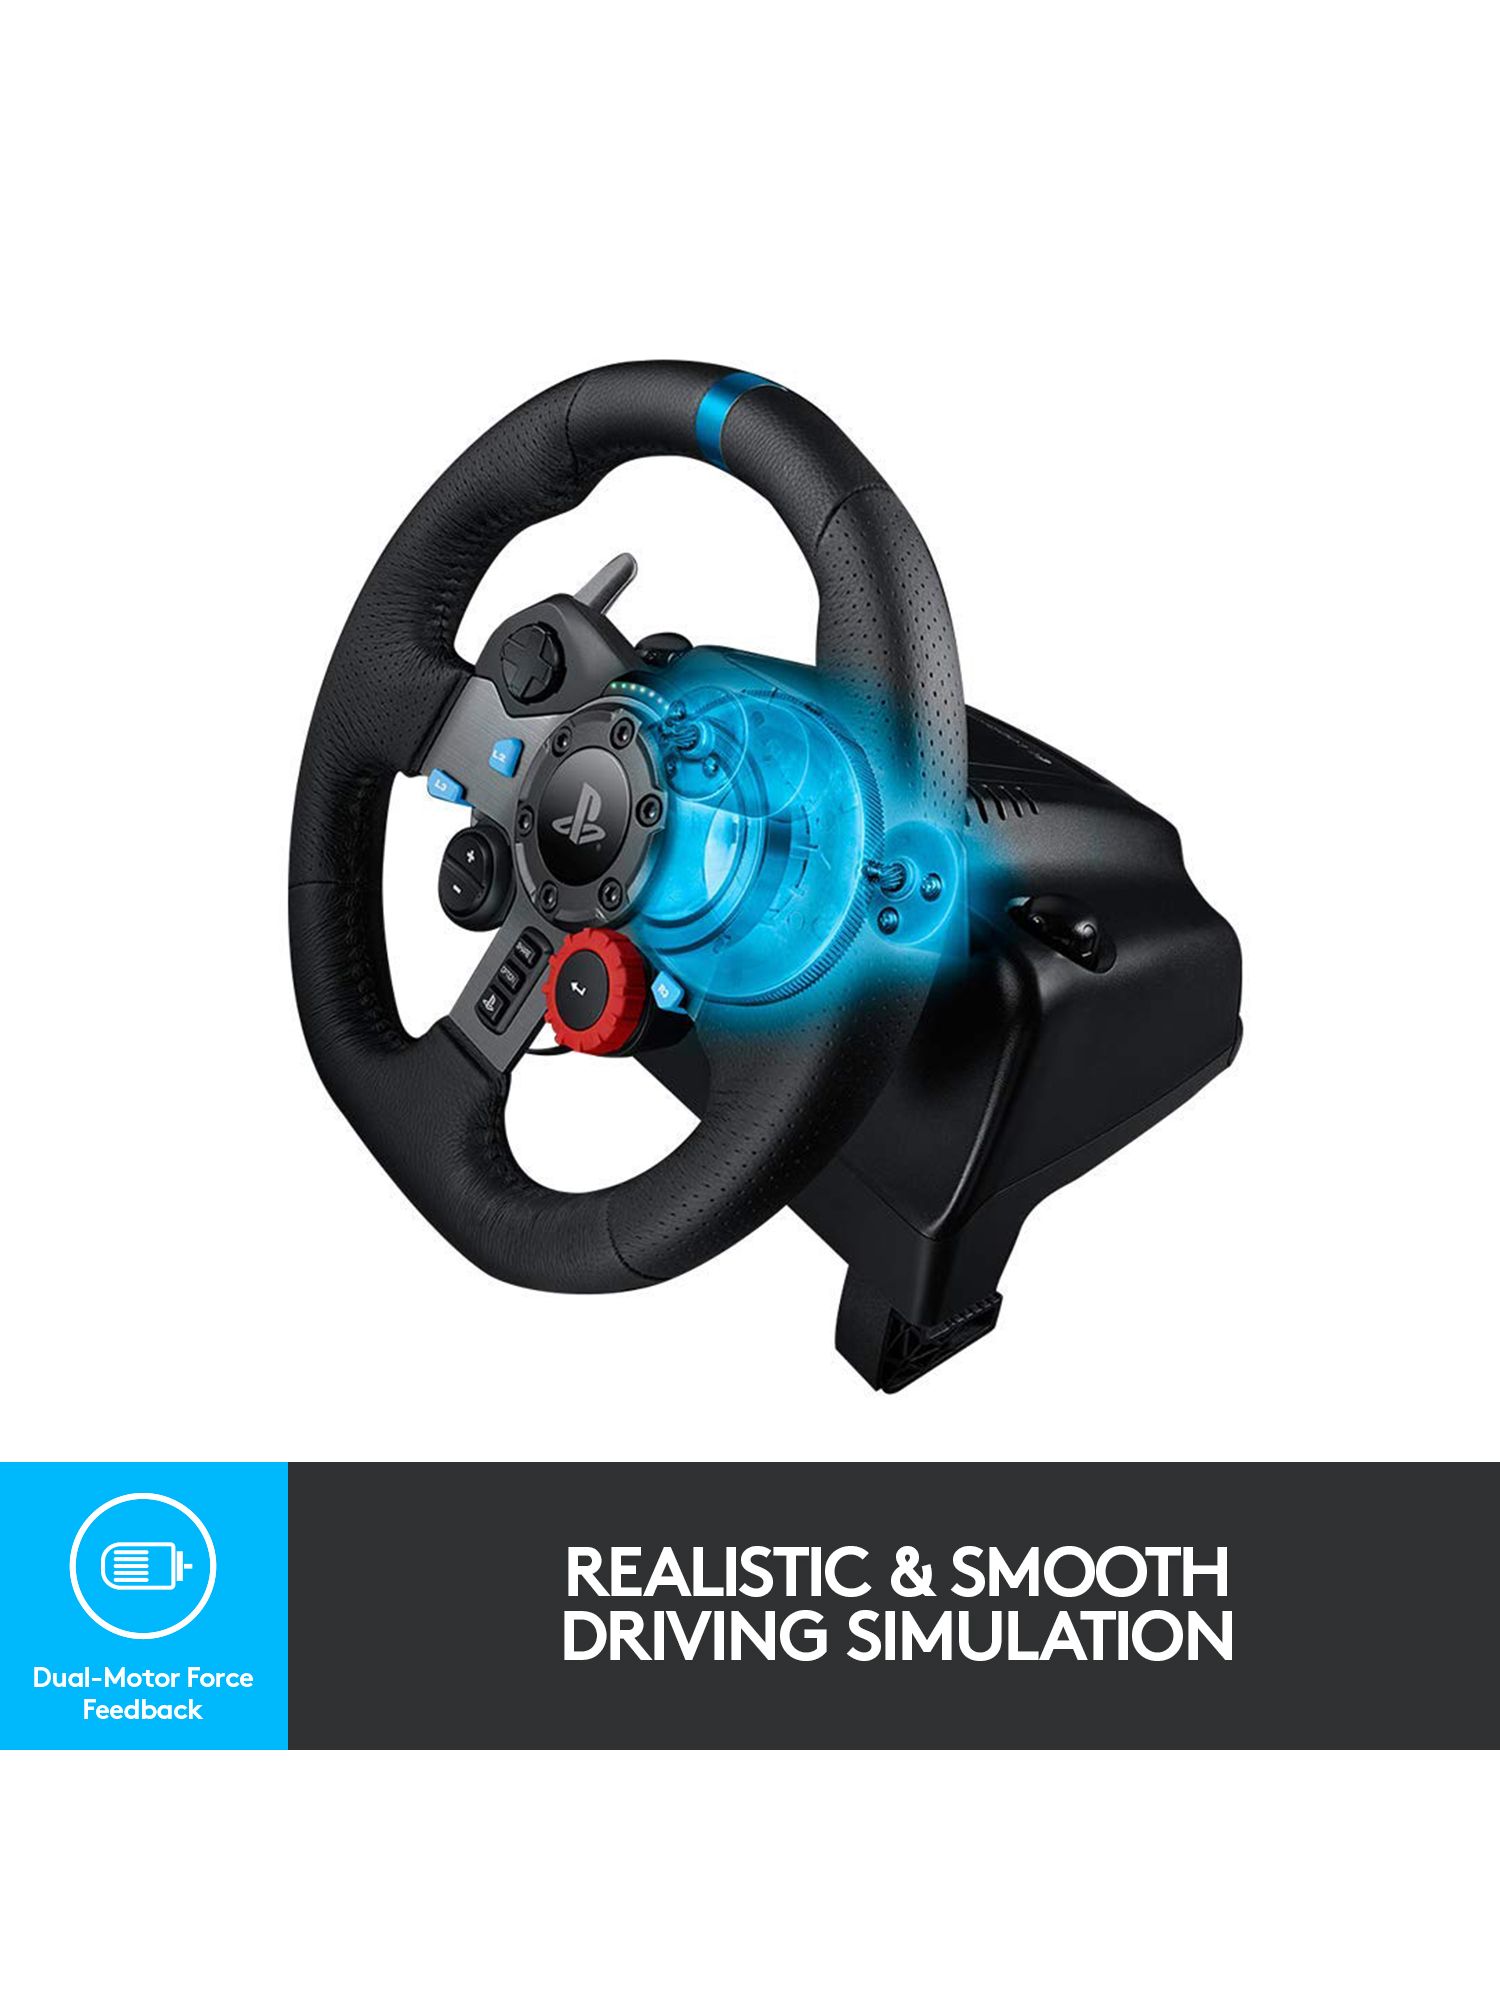 Logitech G-29 Driving Force Gaming Racing Wheel (Playstation) 941